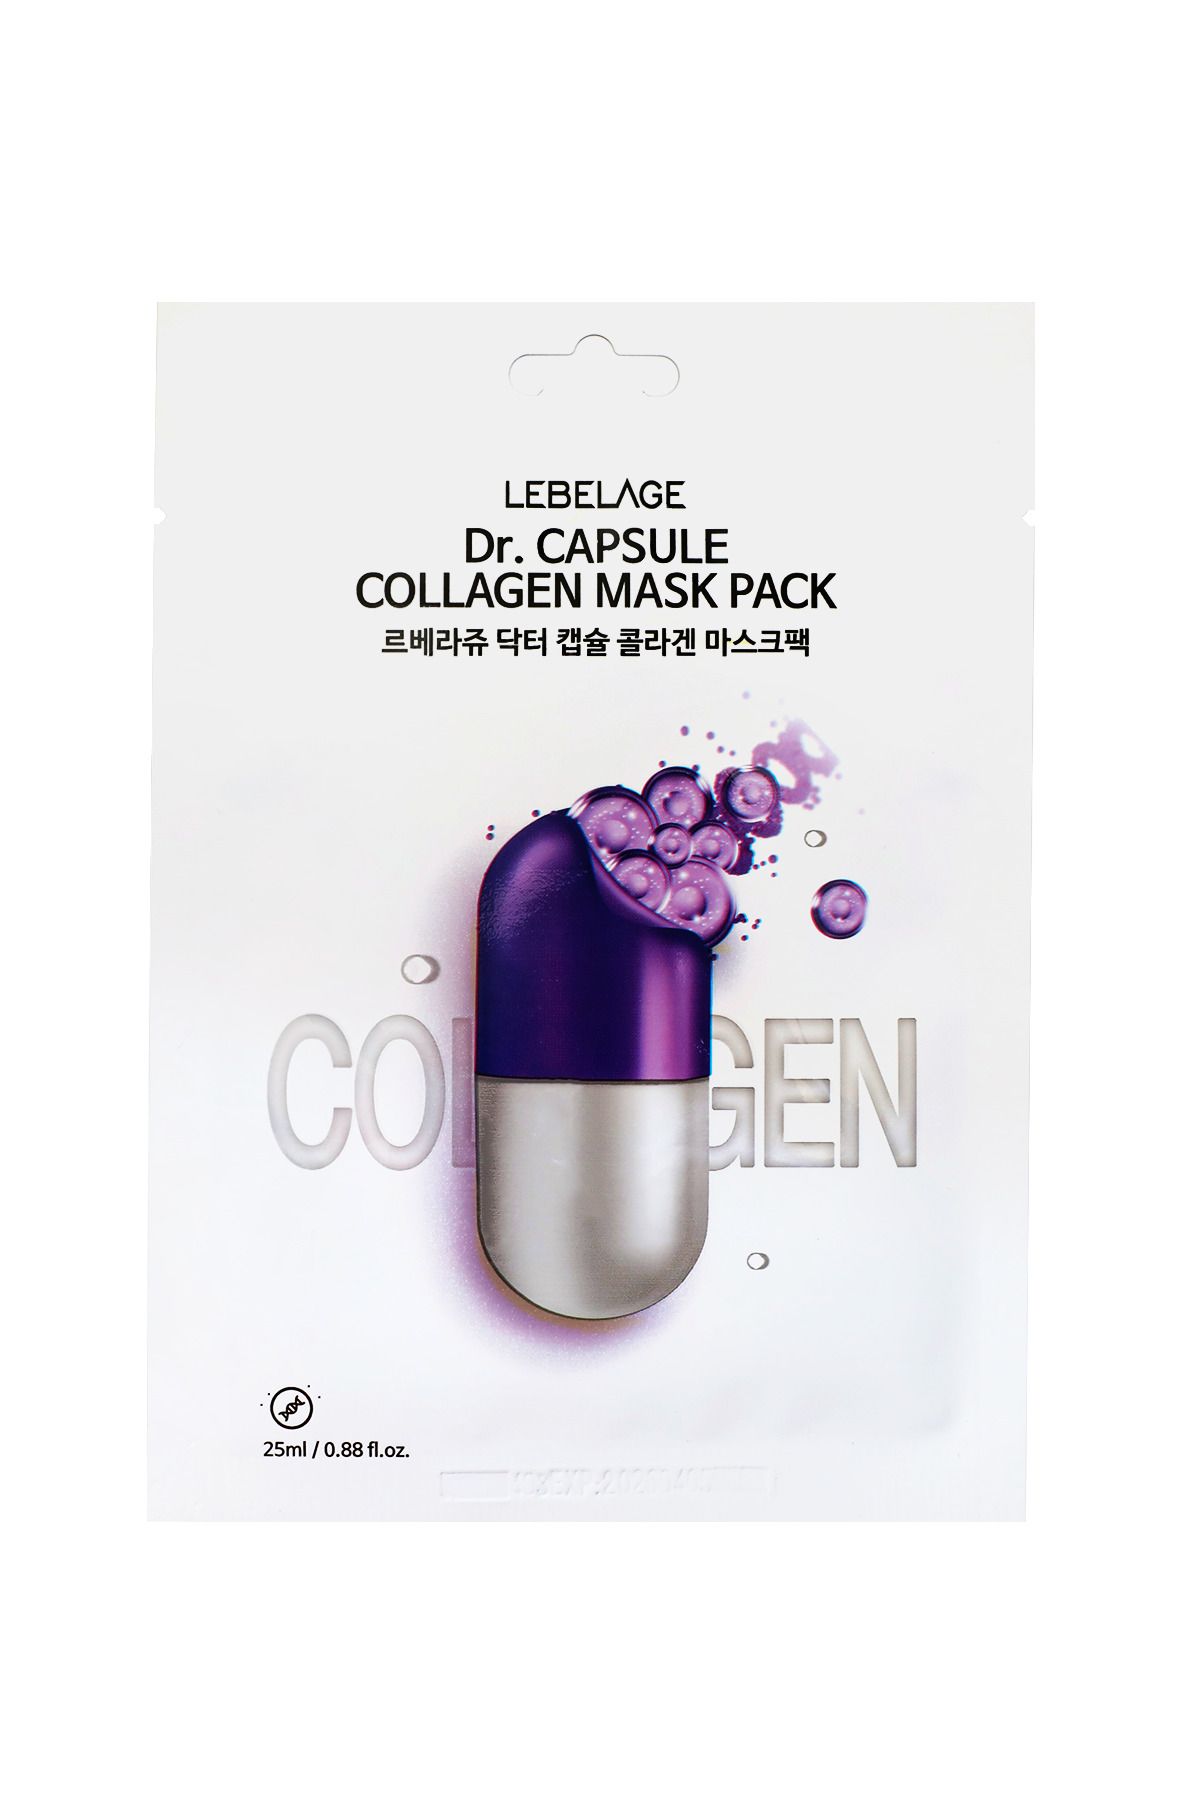 LEBELAGE Yaşlanma Karşıtı Kapsül Kolajen Kağıt Maske Lebelage Dr. Capsule Collagen Mask Pack